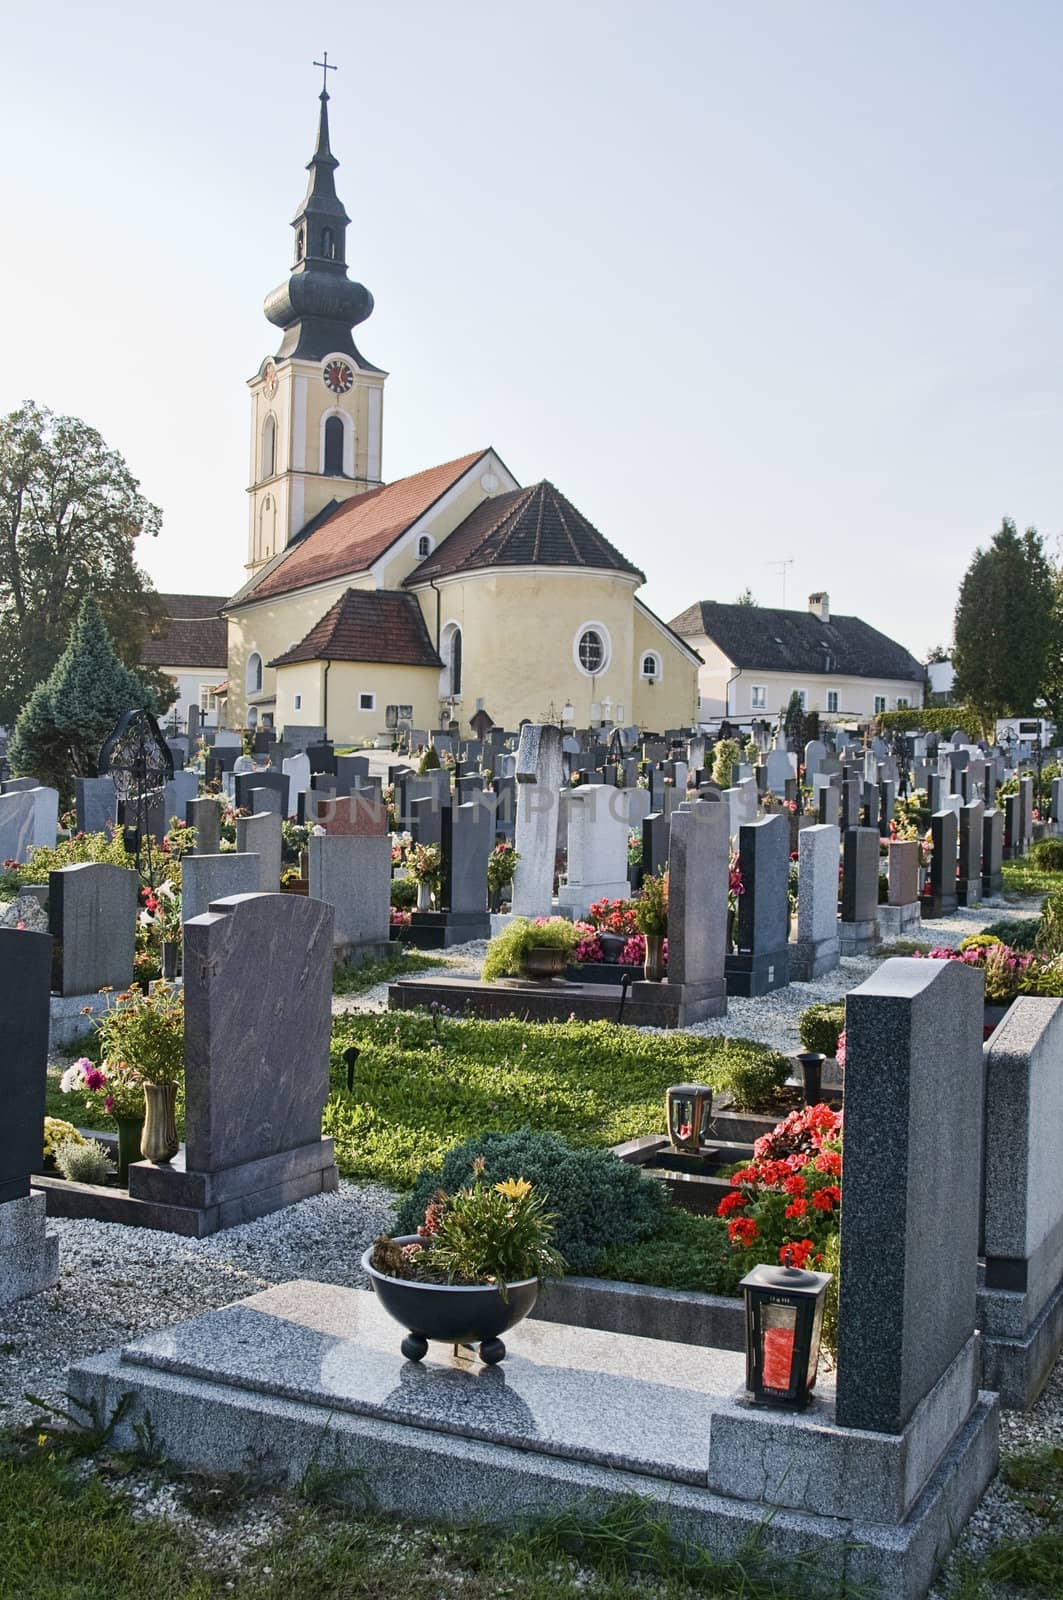 Graveyard and Church in Austria